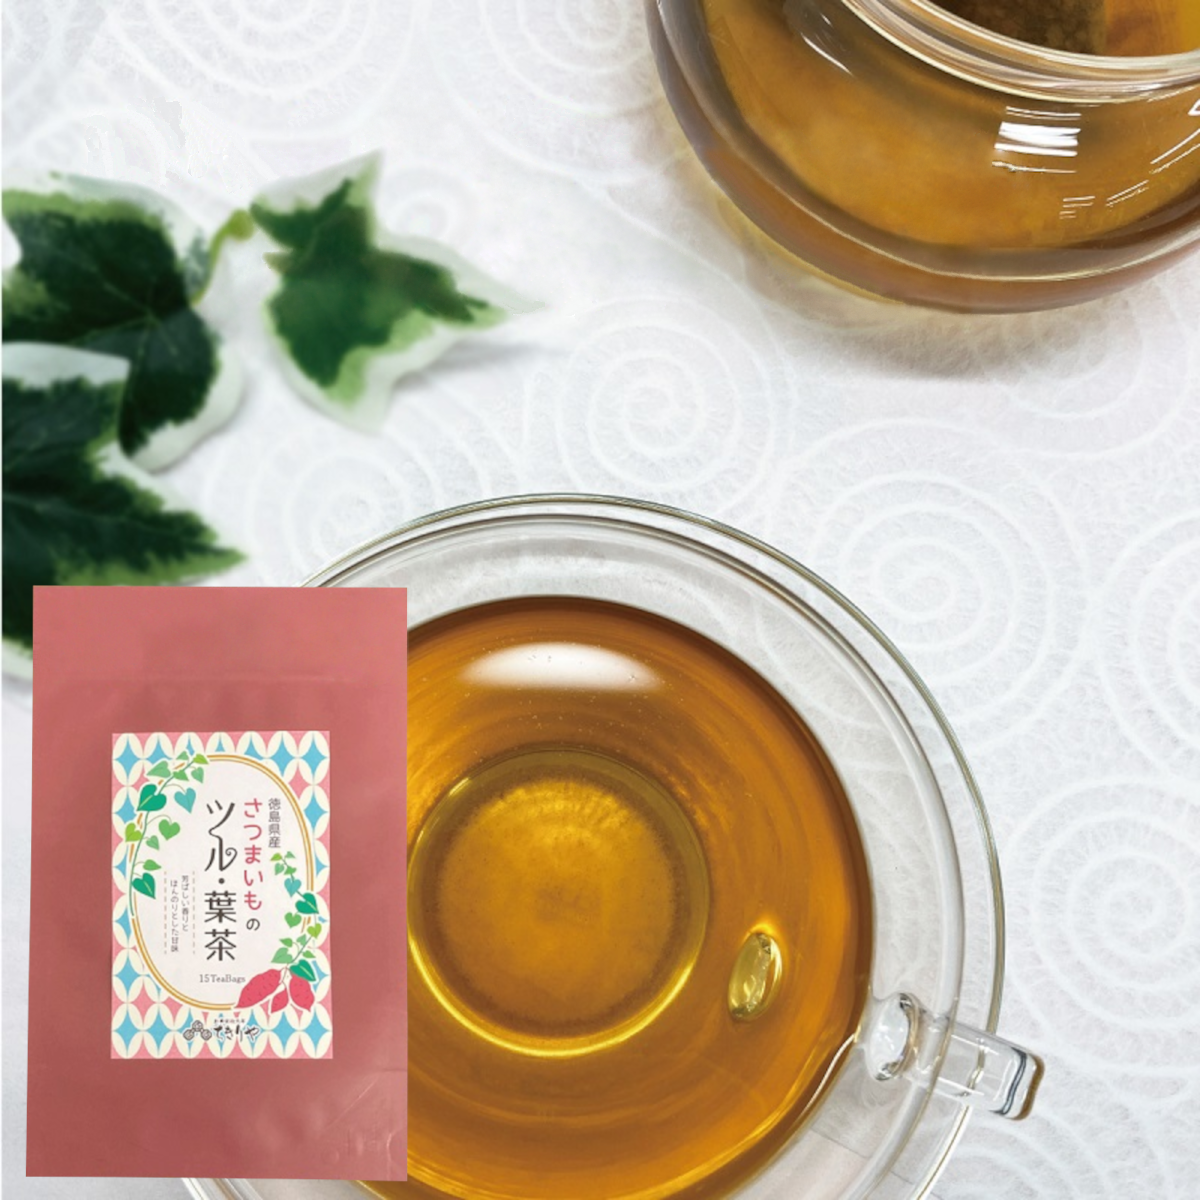 [Stock clearance sales!] Sweet Potato Vine and Leaf Tea - 3g x 15 Tea bags